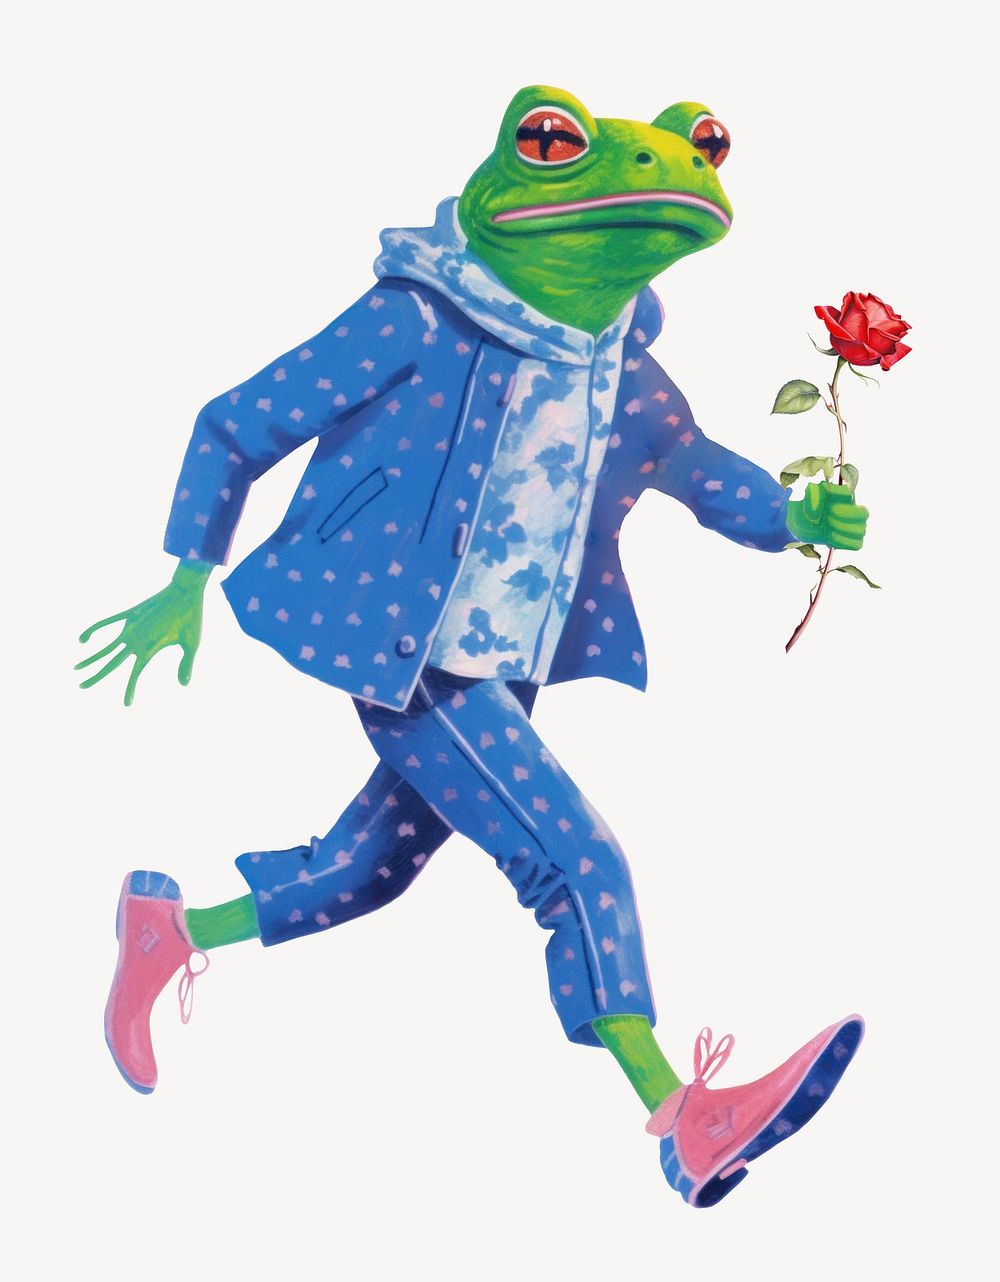 Frog character holding red rose digital art illustration